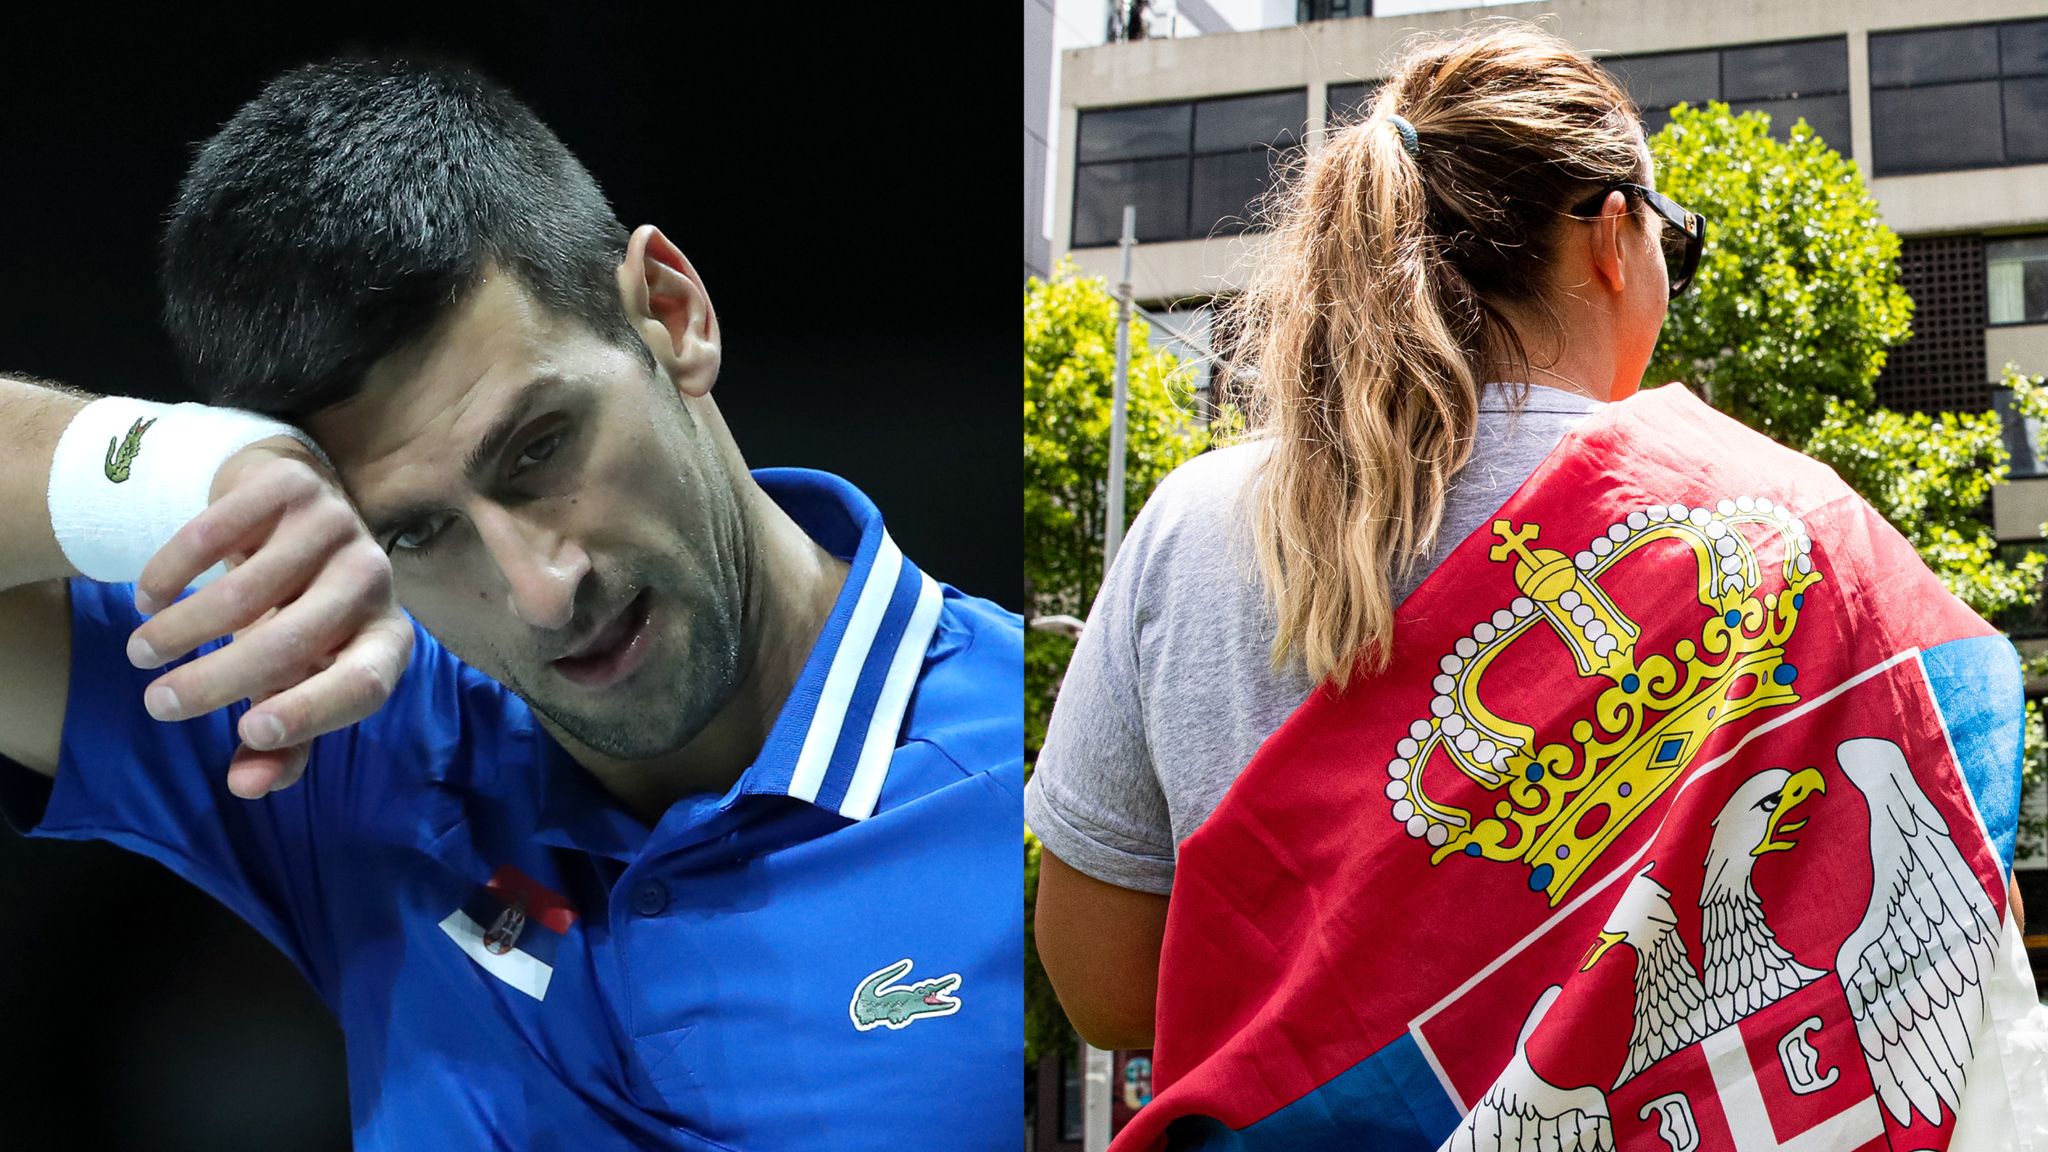 Dubai ATP 2022: Novak Djokovic, return, vaccination status, press  conference, reaction, tennis news, Australian Open